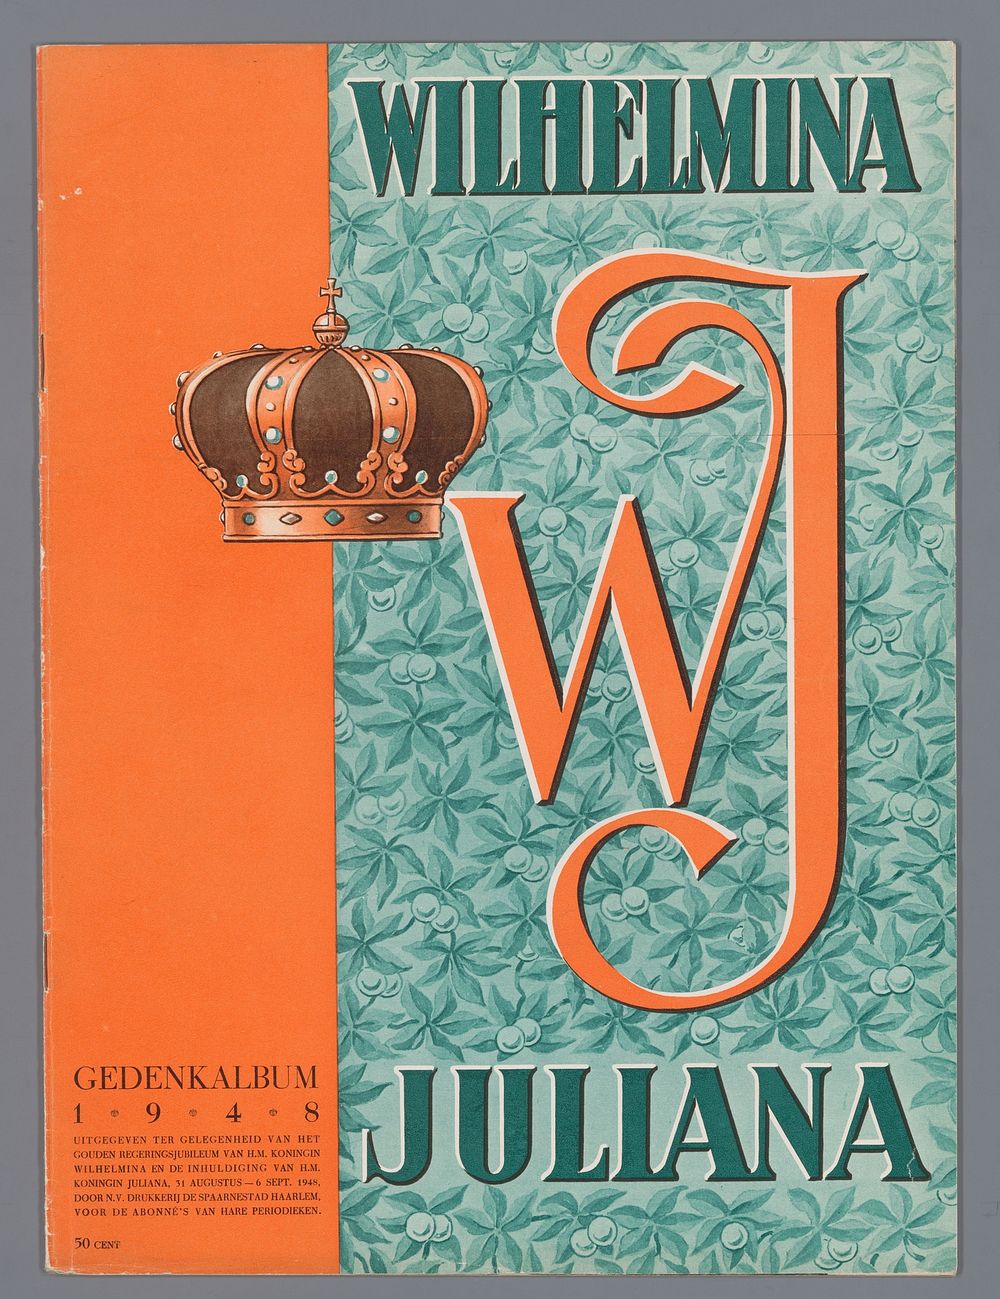 Gedenkalbum 1948: Wilhelmina - Juliana (1948) by N V Drukkerij De Spaarnestad